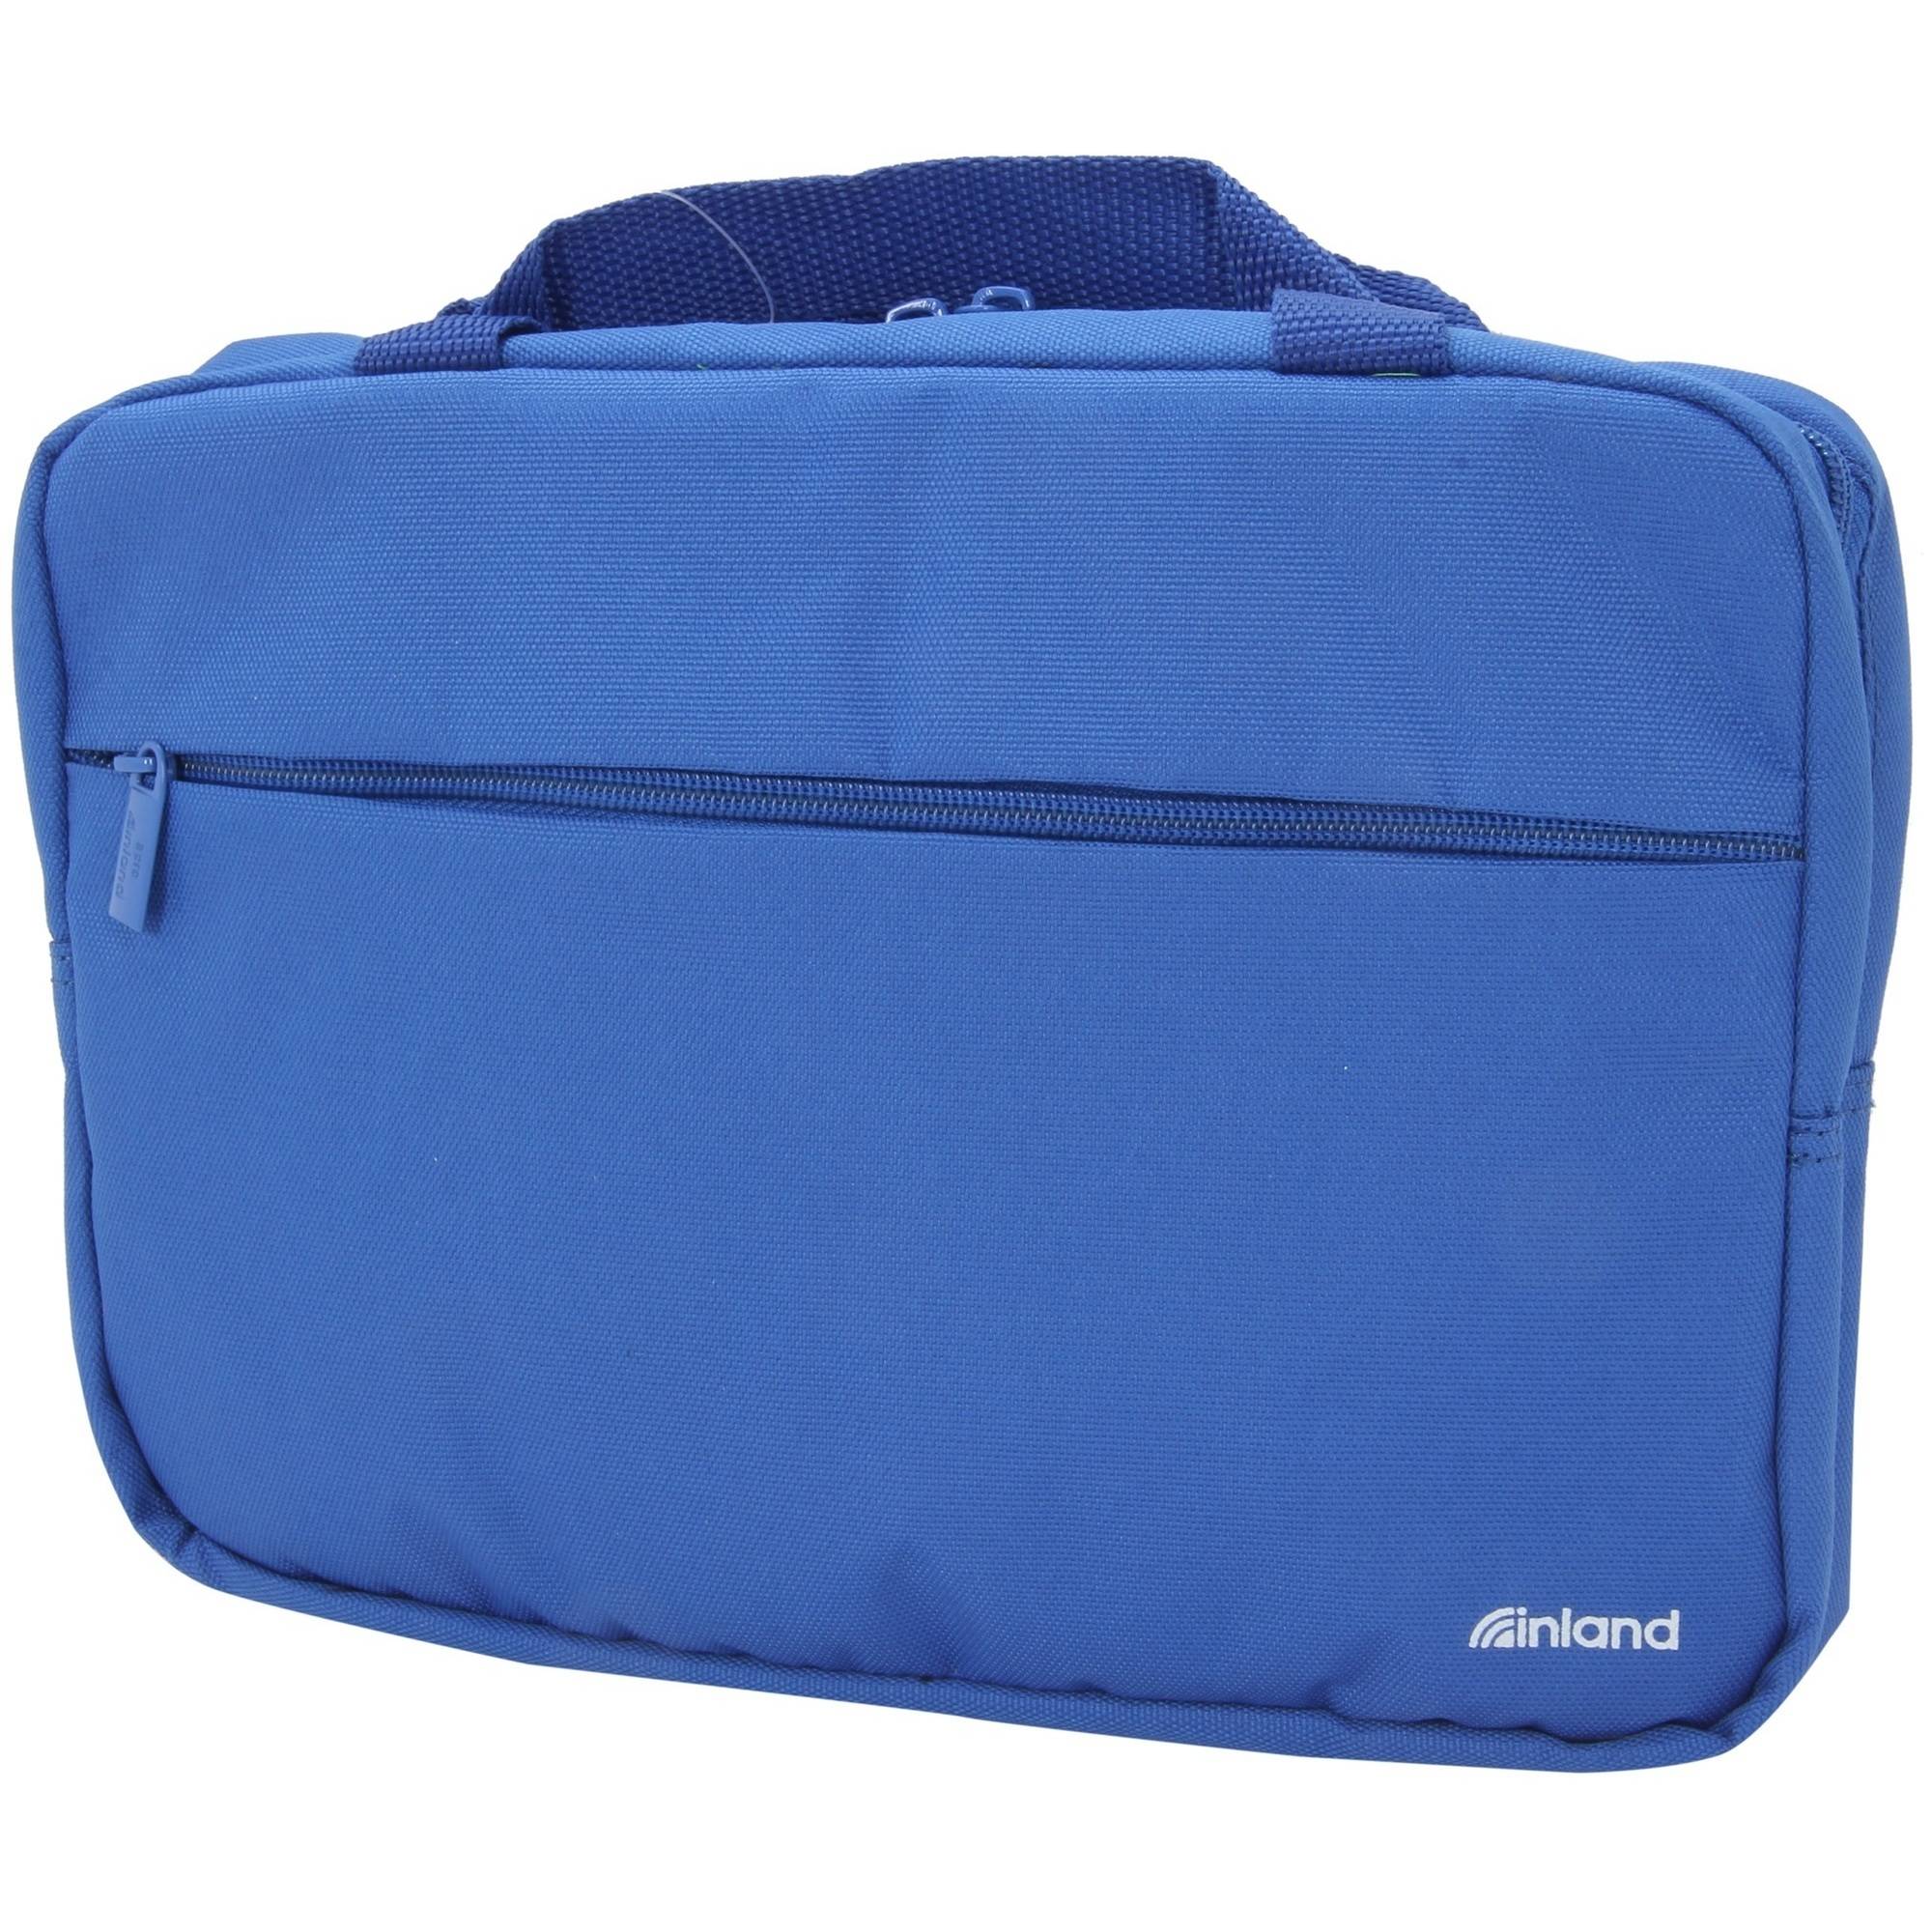 Inland Pro 10.2" Blue Tablet/netbook Bag - image 1 of 4